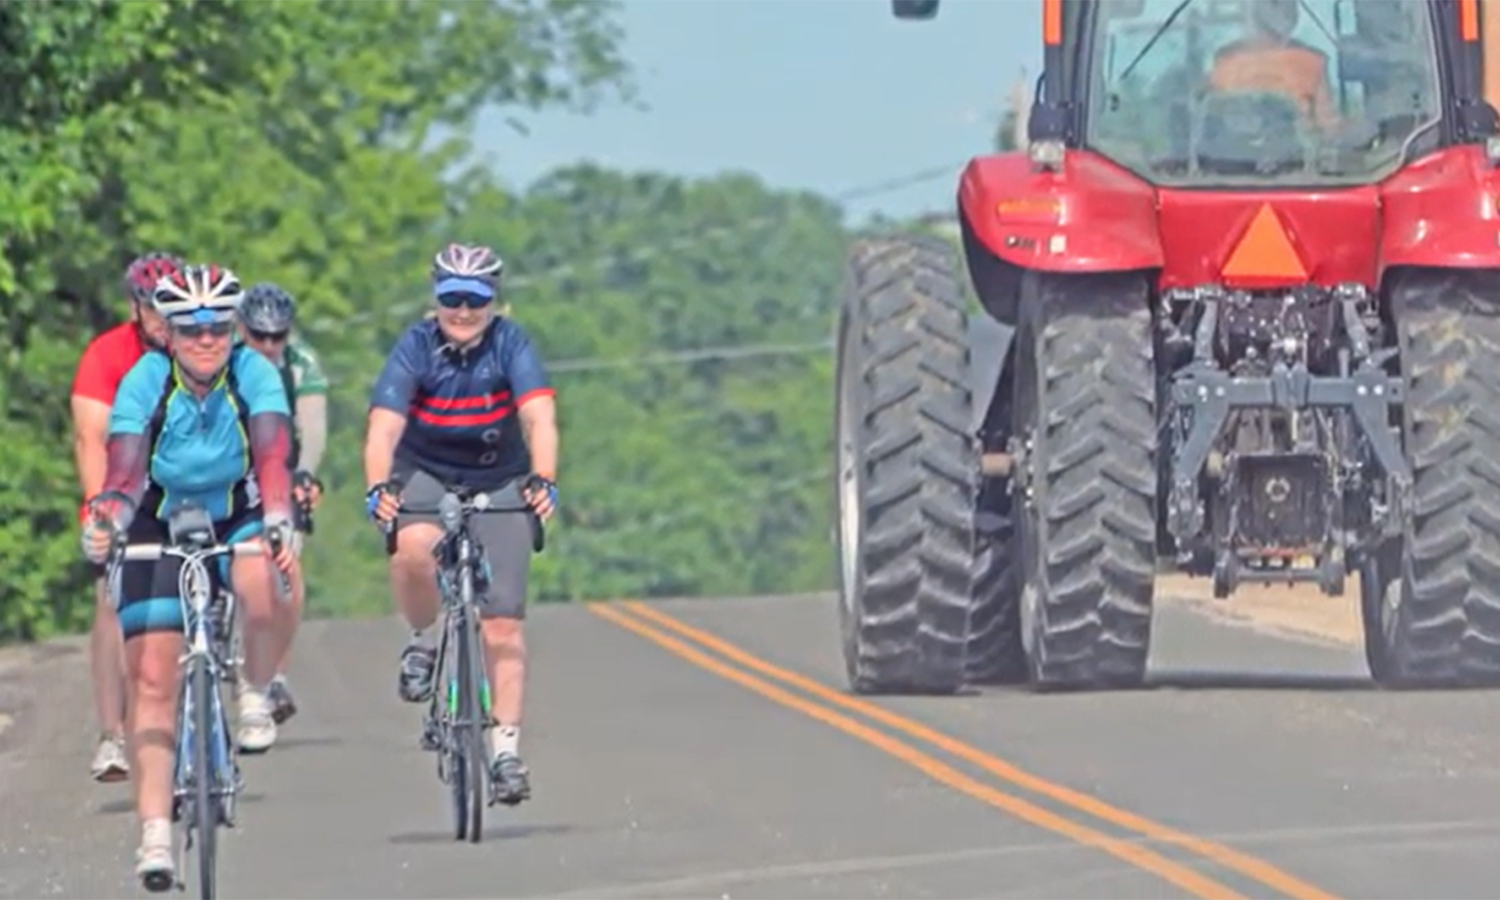 Big BAM bike ride across Missouri event returns this June The